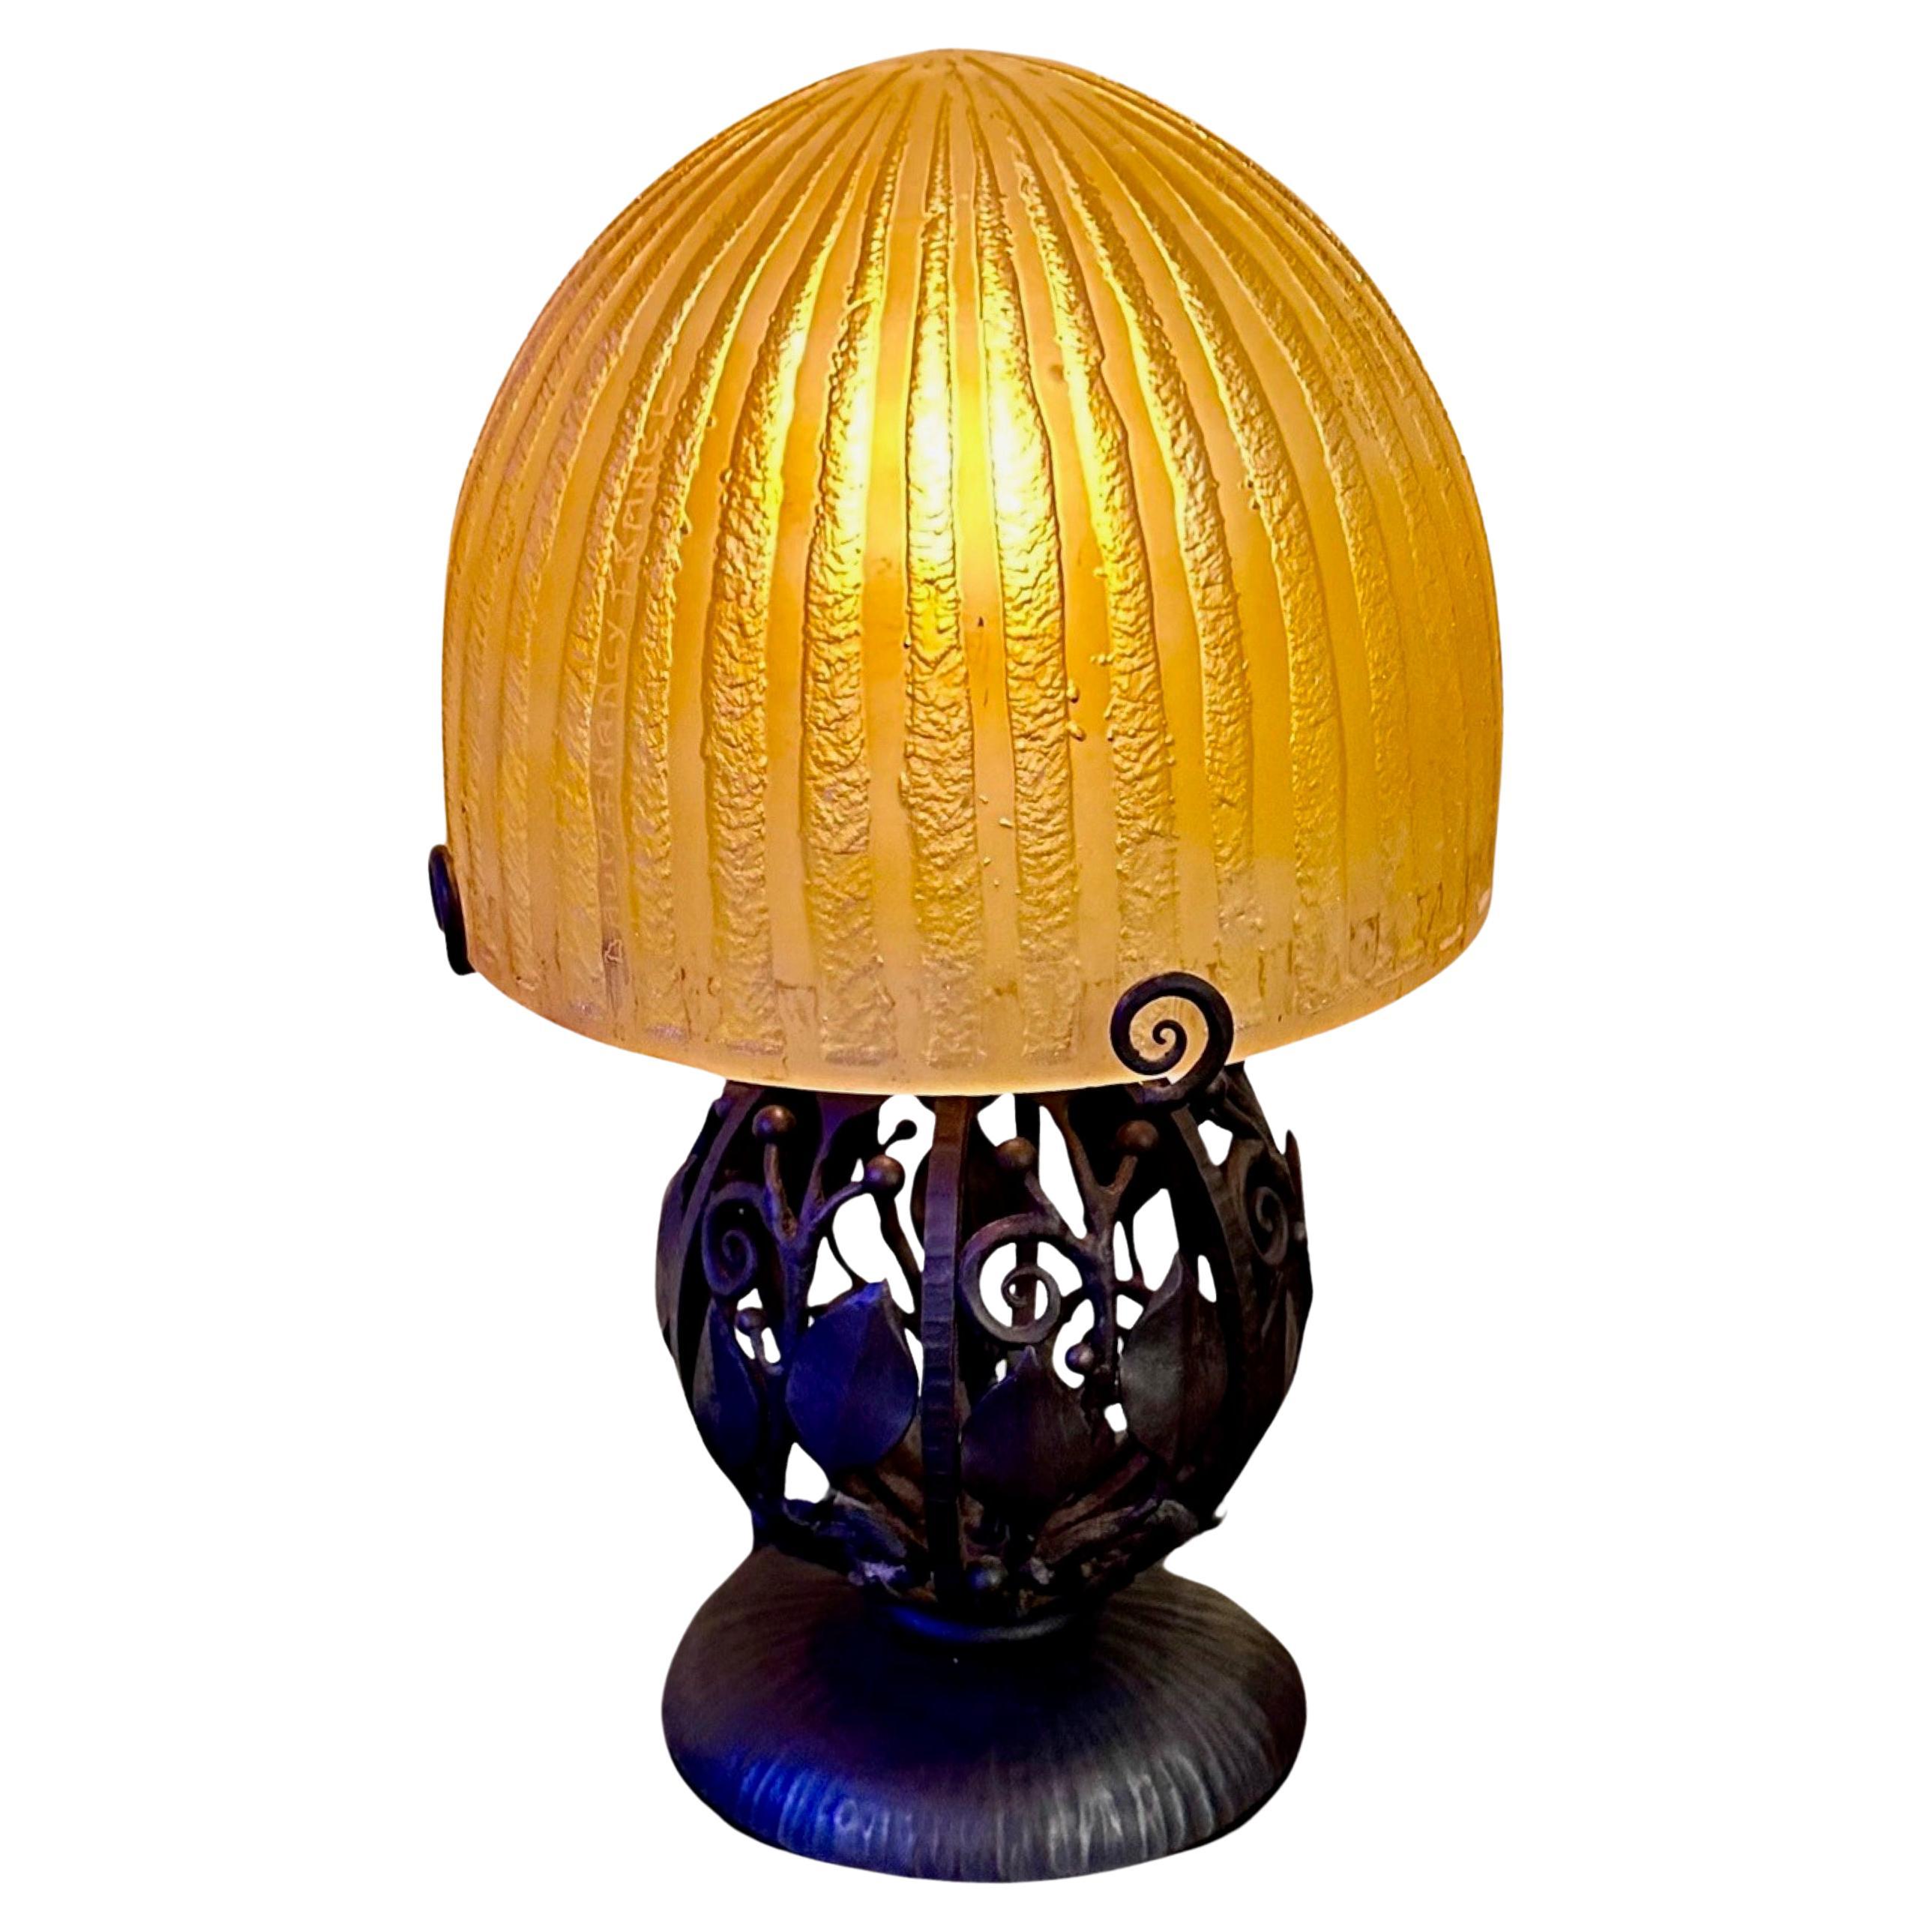 Daum Nancy Art Deco Globus-Eisen-Tischlampe Circa 1925 signiert L Katona